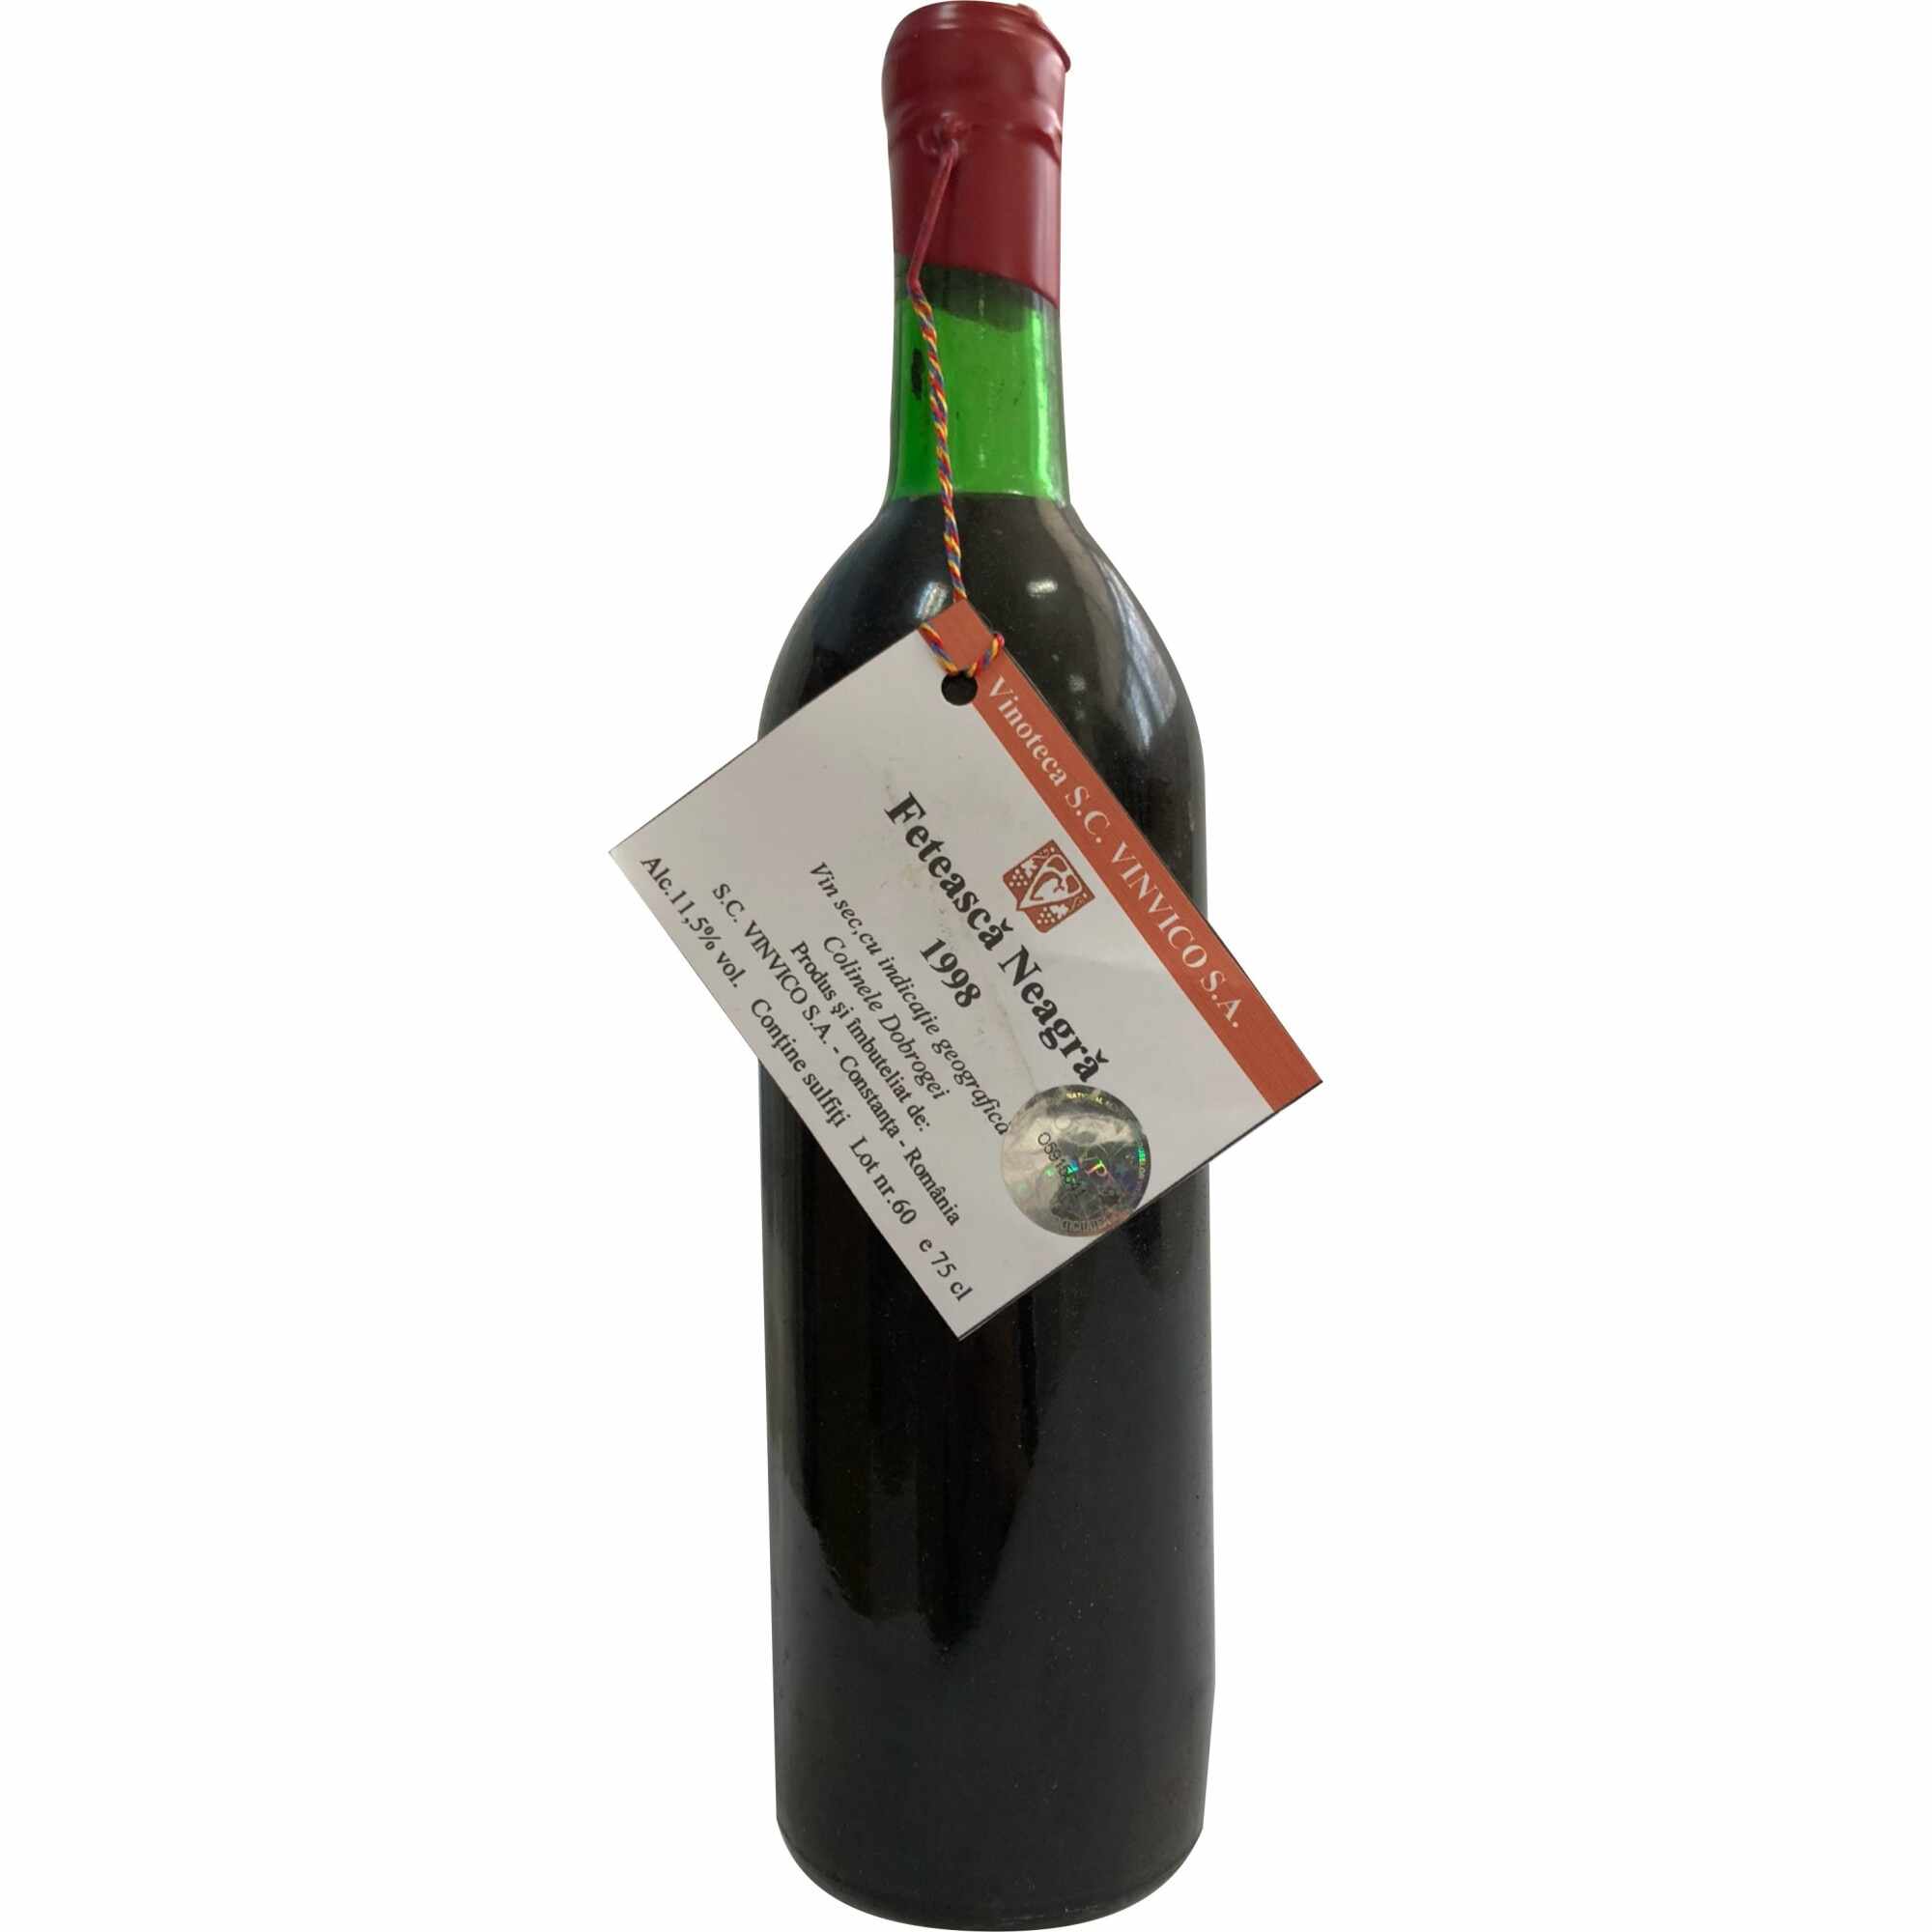 Vin de Vinoteca - Feteasca Neagra 1998, 0.75 L - in cutie de lemn